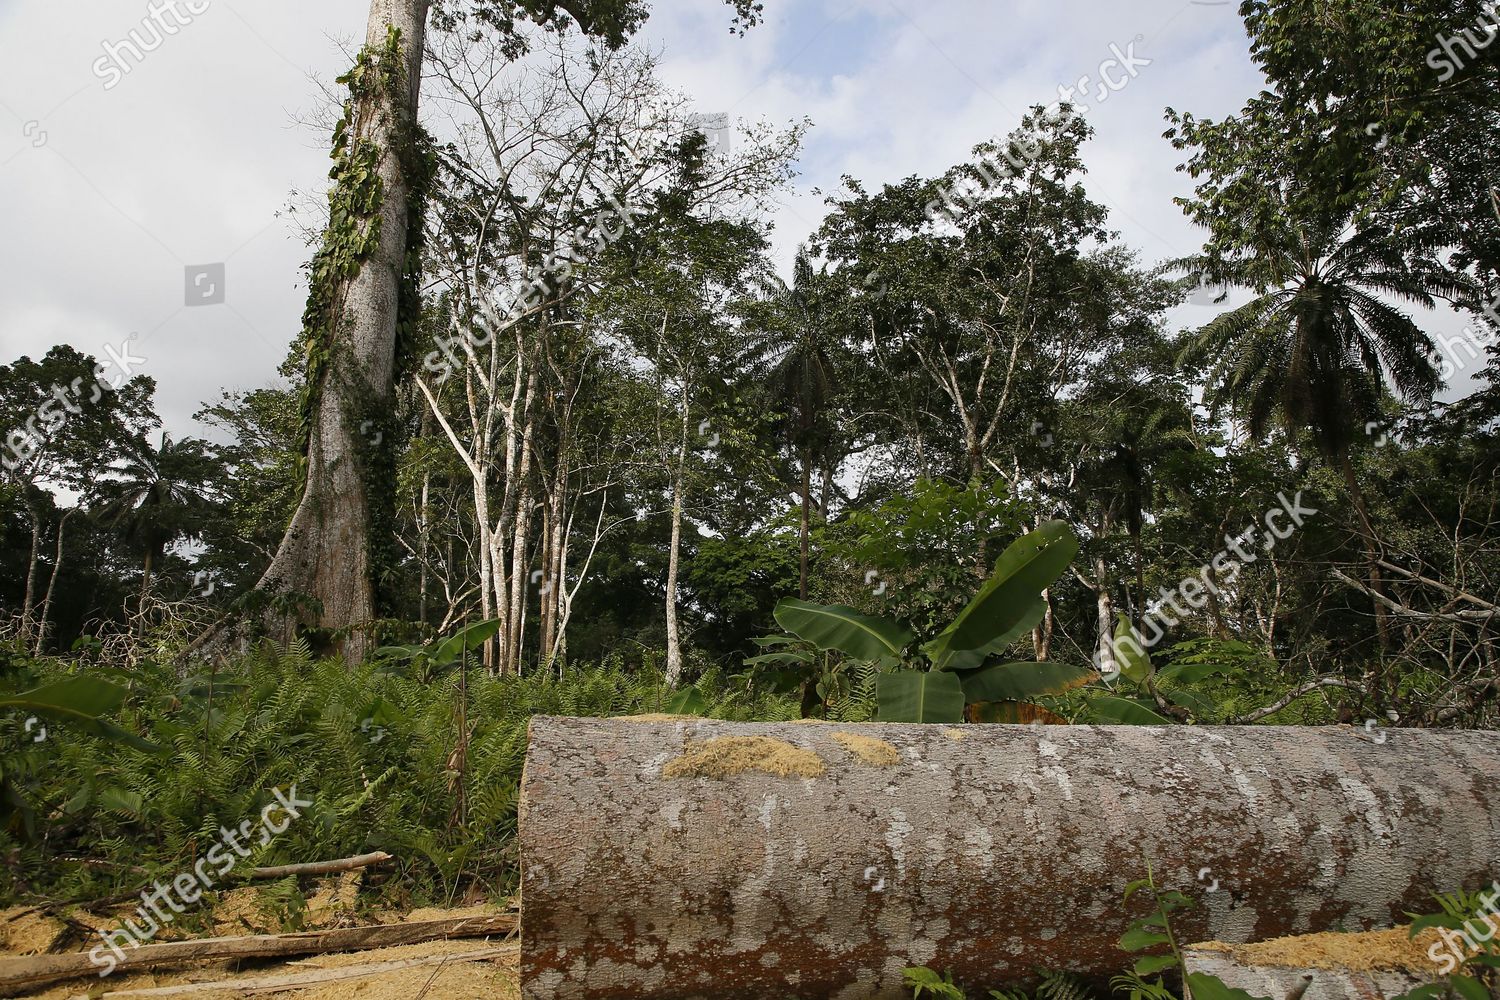 View Felled Tree Forest Alepe Region Cocoa Photos Editoriales Libres De Droits Image Libre De Droits Shutterstock